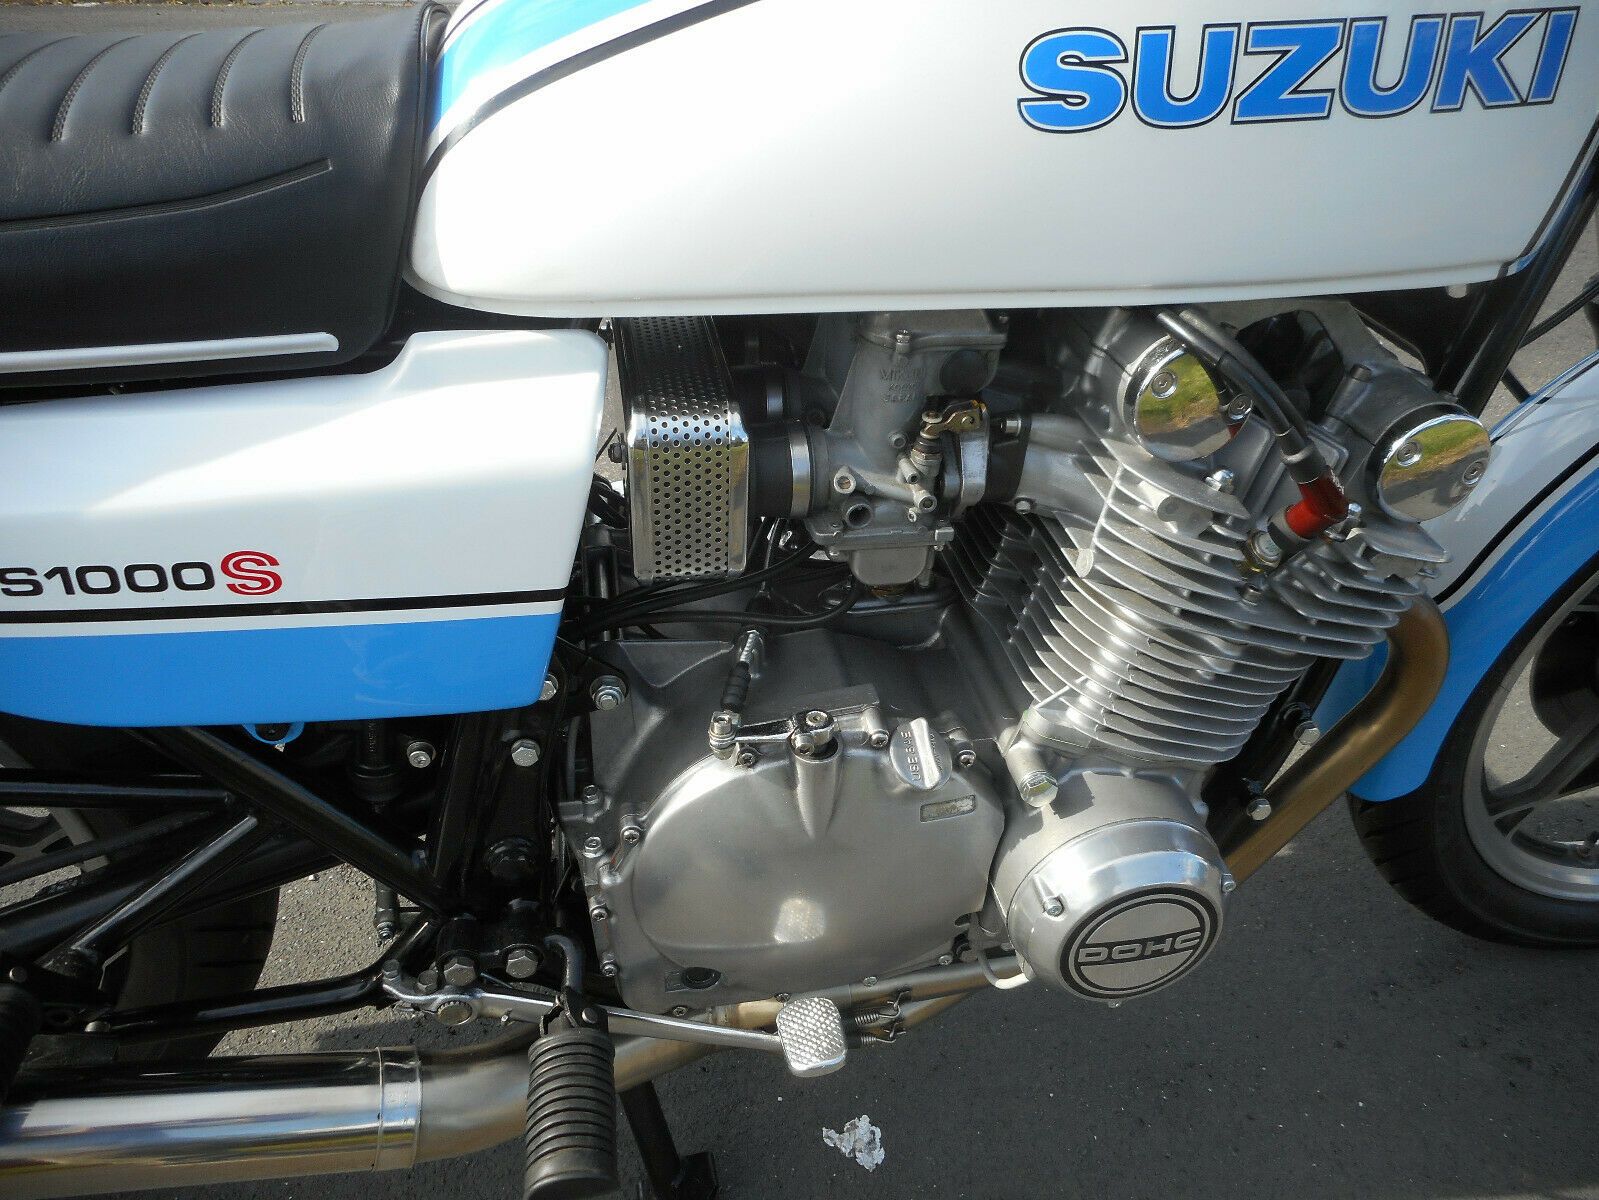 Ride side static photo of a Suzuki GS 1000 S engine